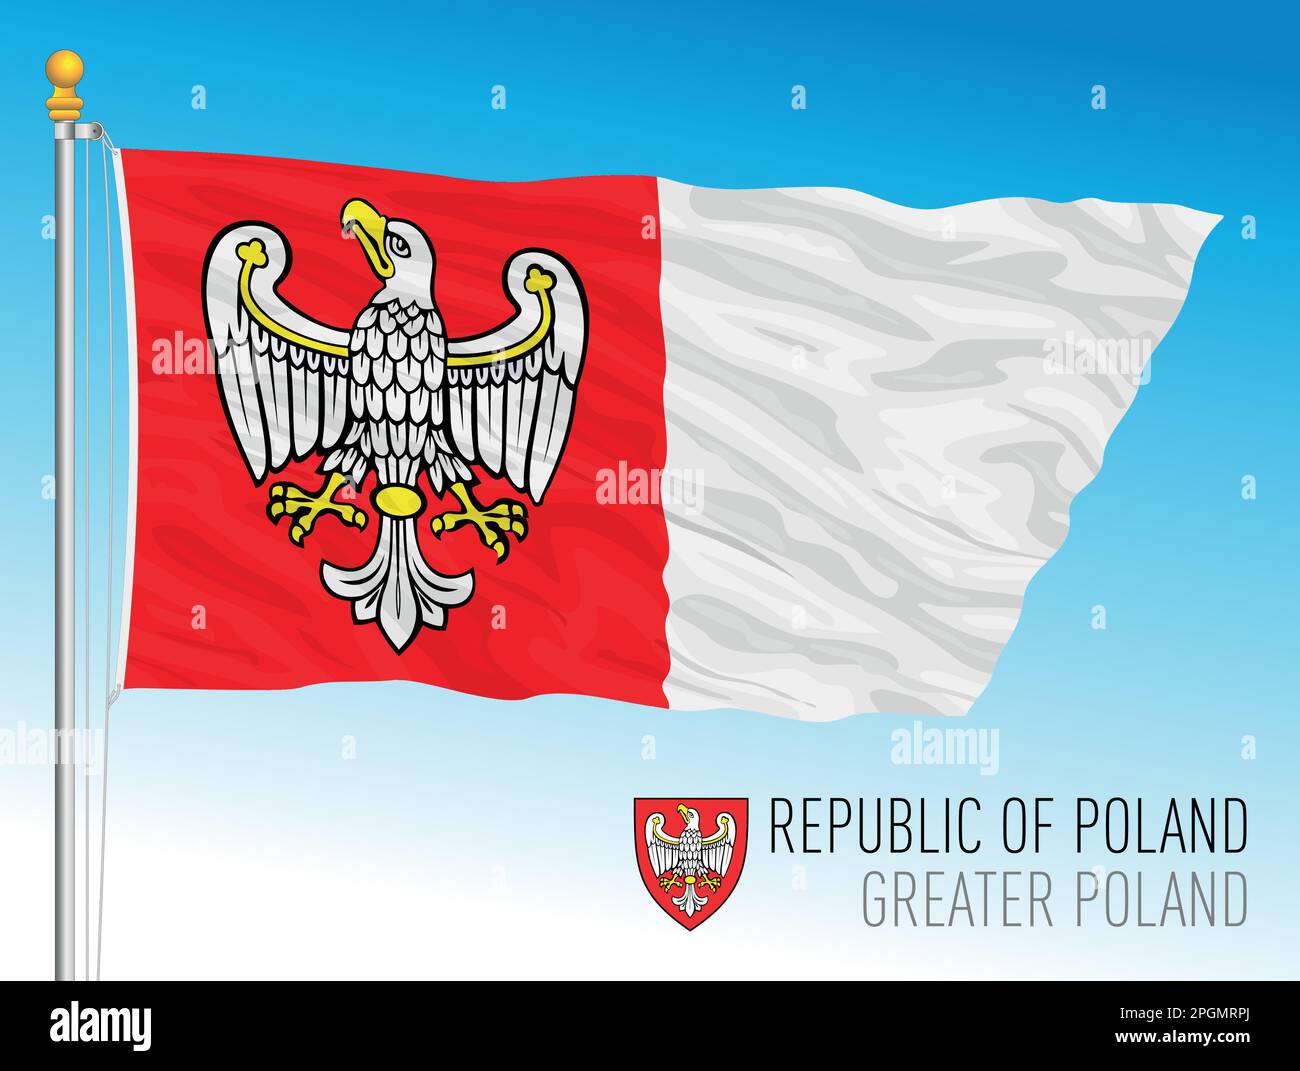 Greater Poland regional flag, Republic of Poland, european country, vector illustration Stock Vector